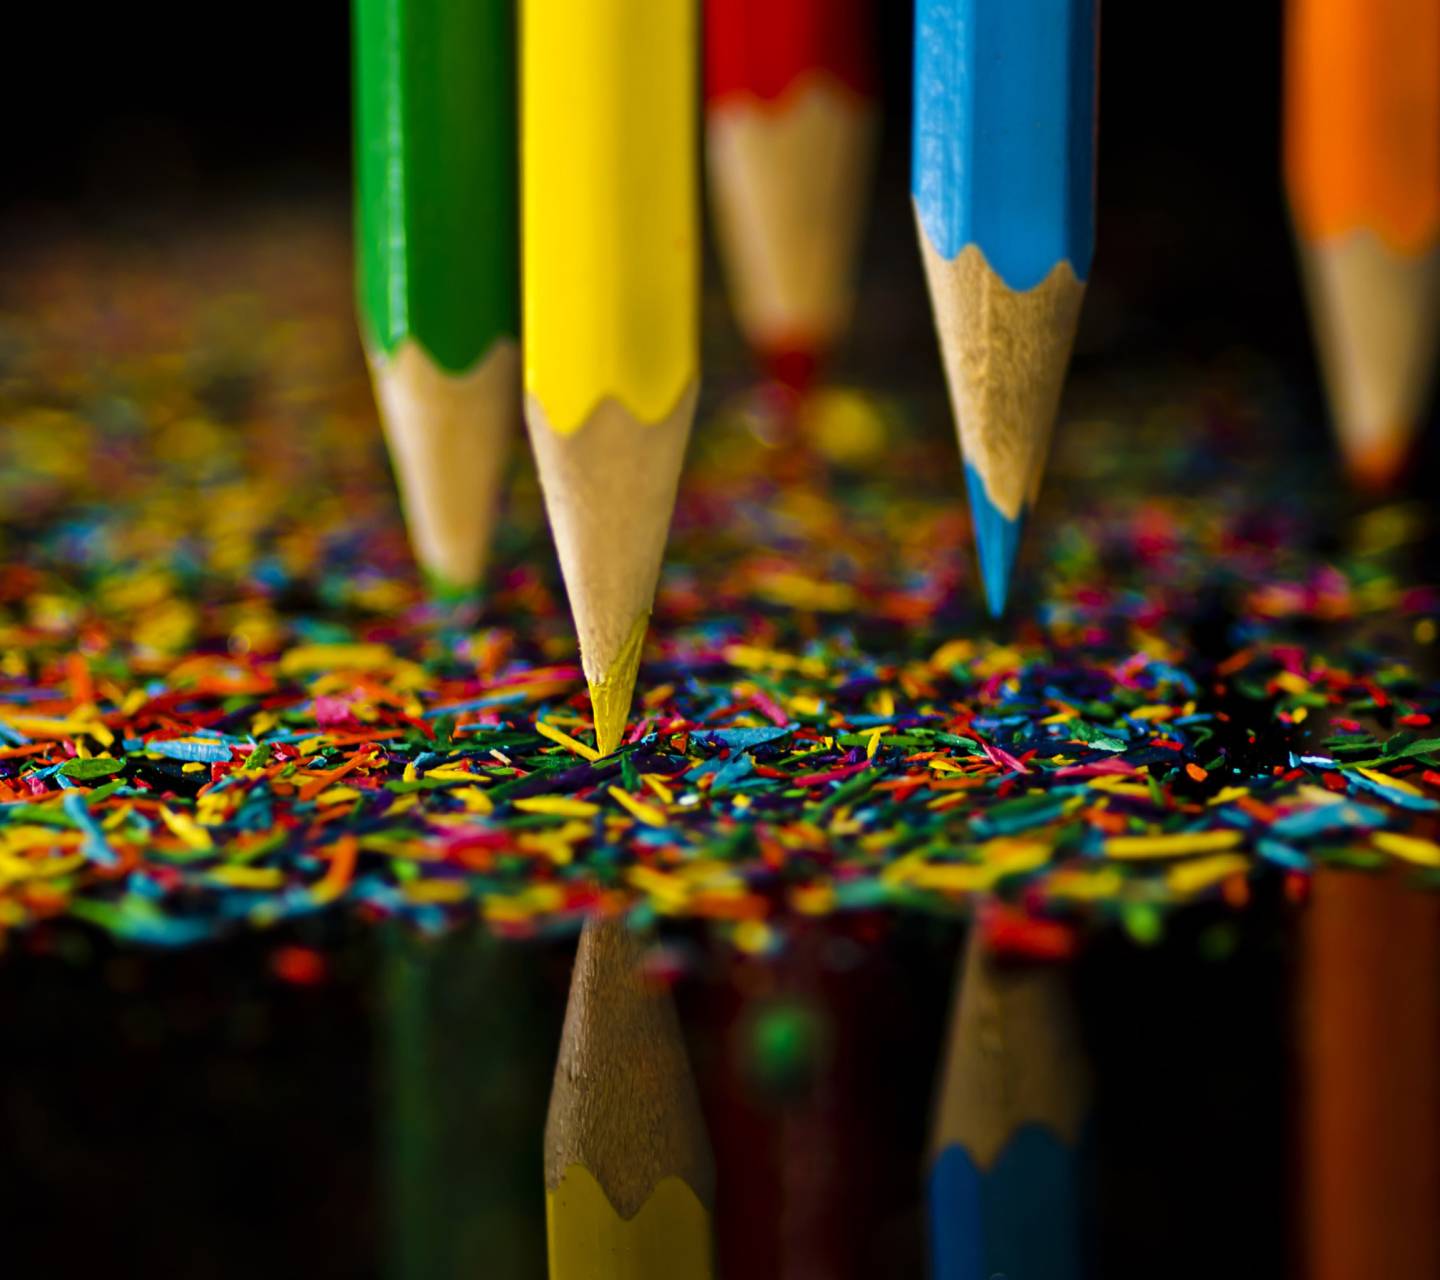 Colored Pencils wallpaper by .zedge.net